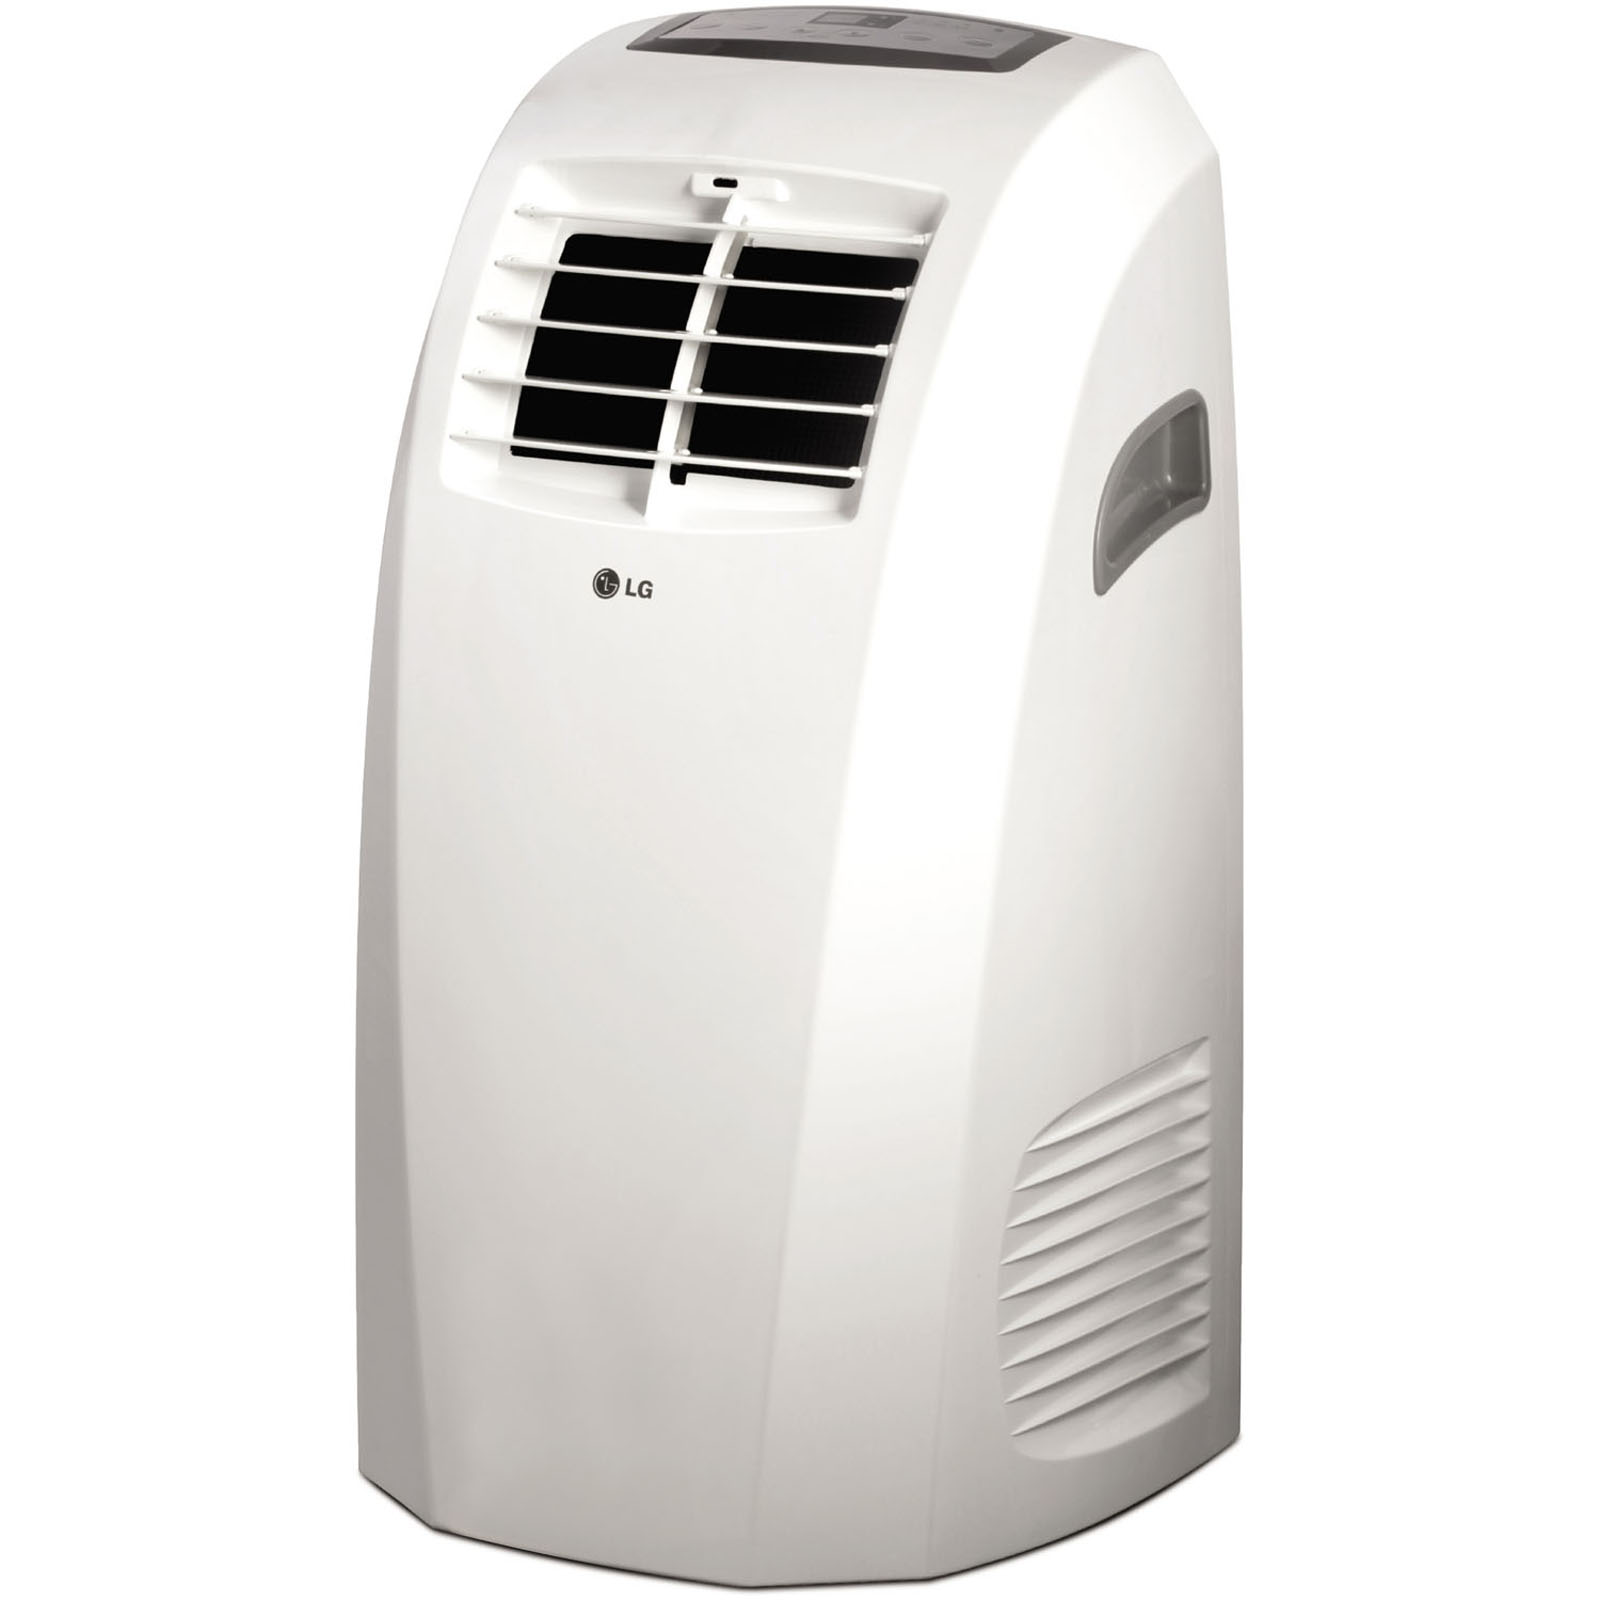 LG LP1014WNR 10,000 BTU 115V Portable Air Conditioner with Remote Control White